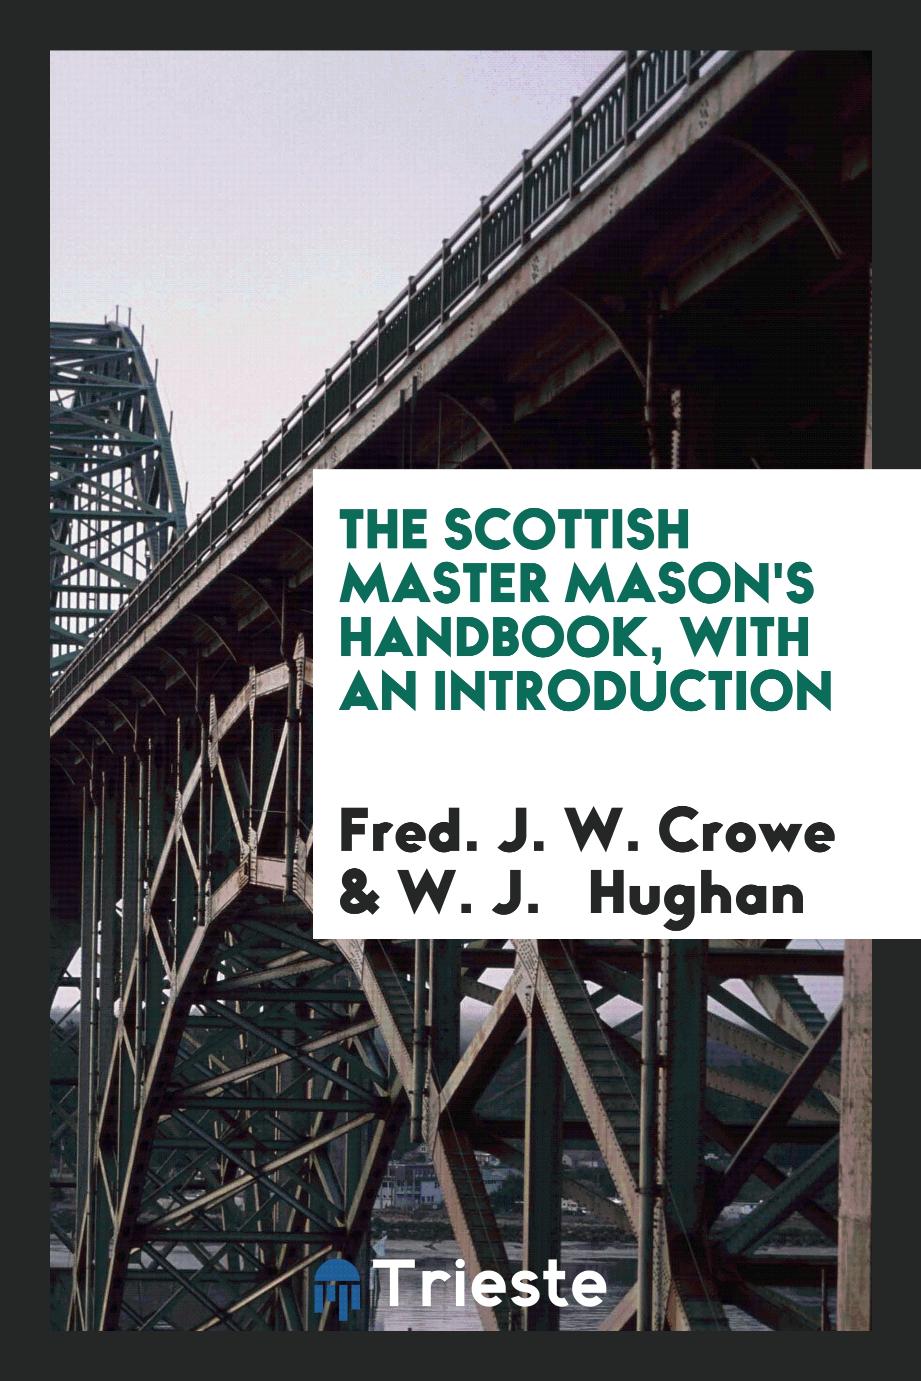 The Scottish Master Mason's Handbook, with an Introduction